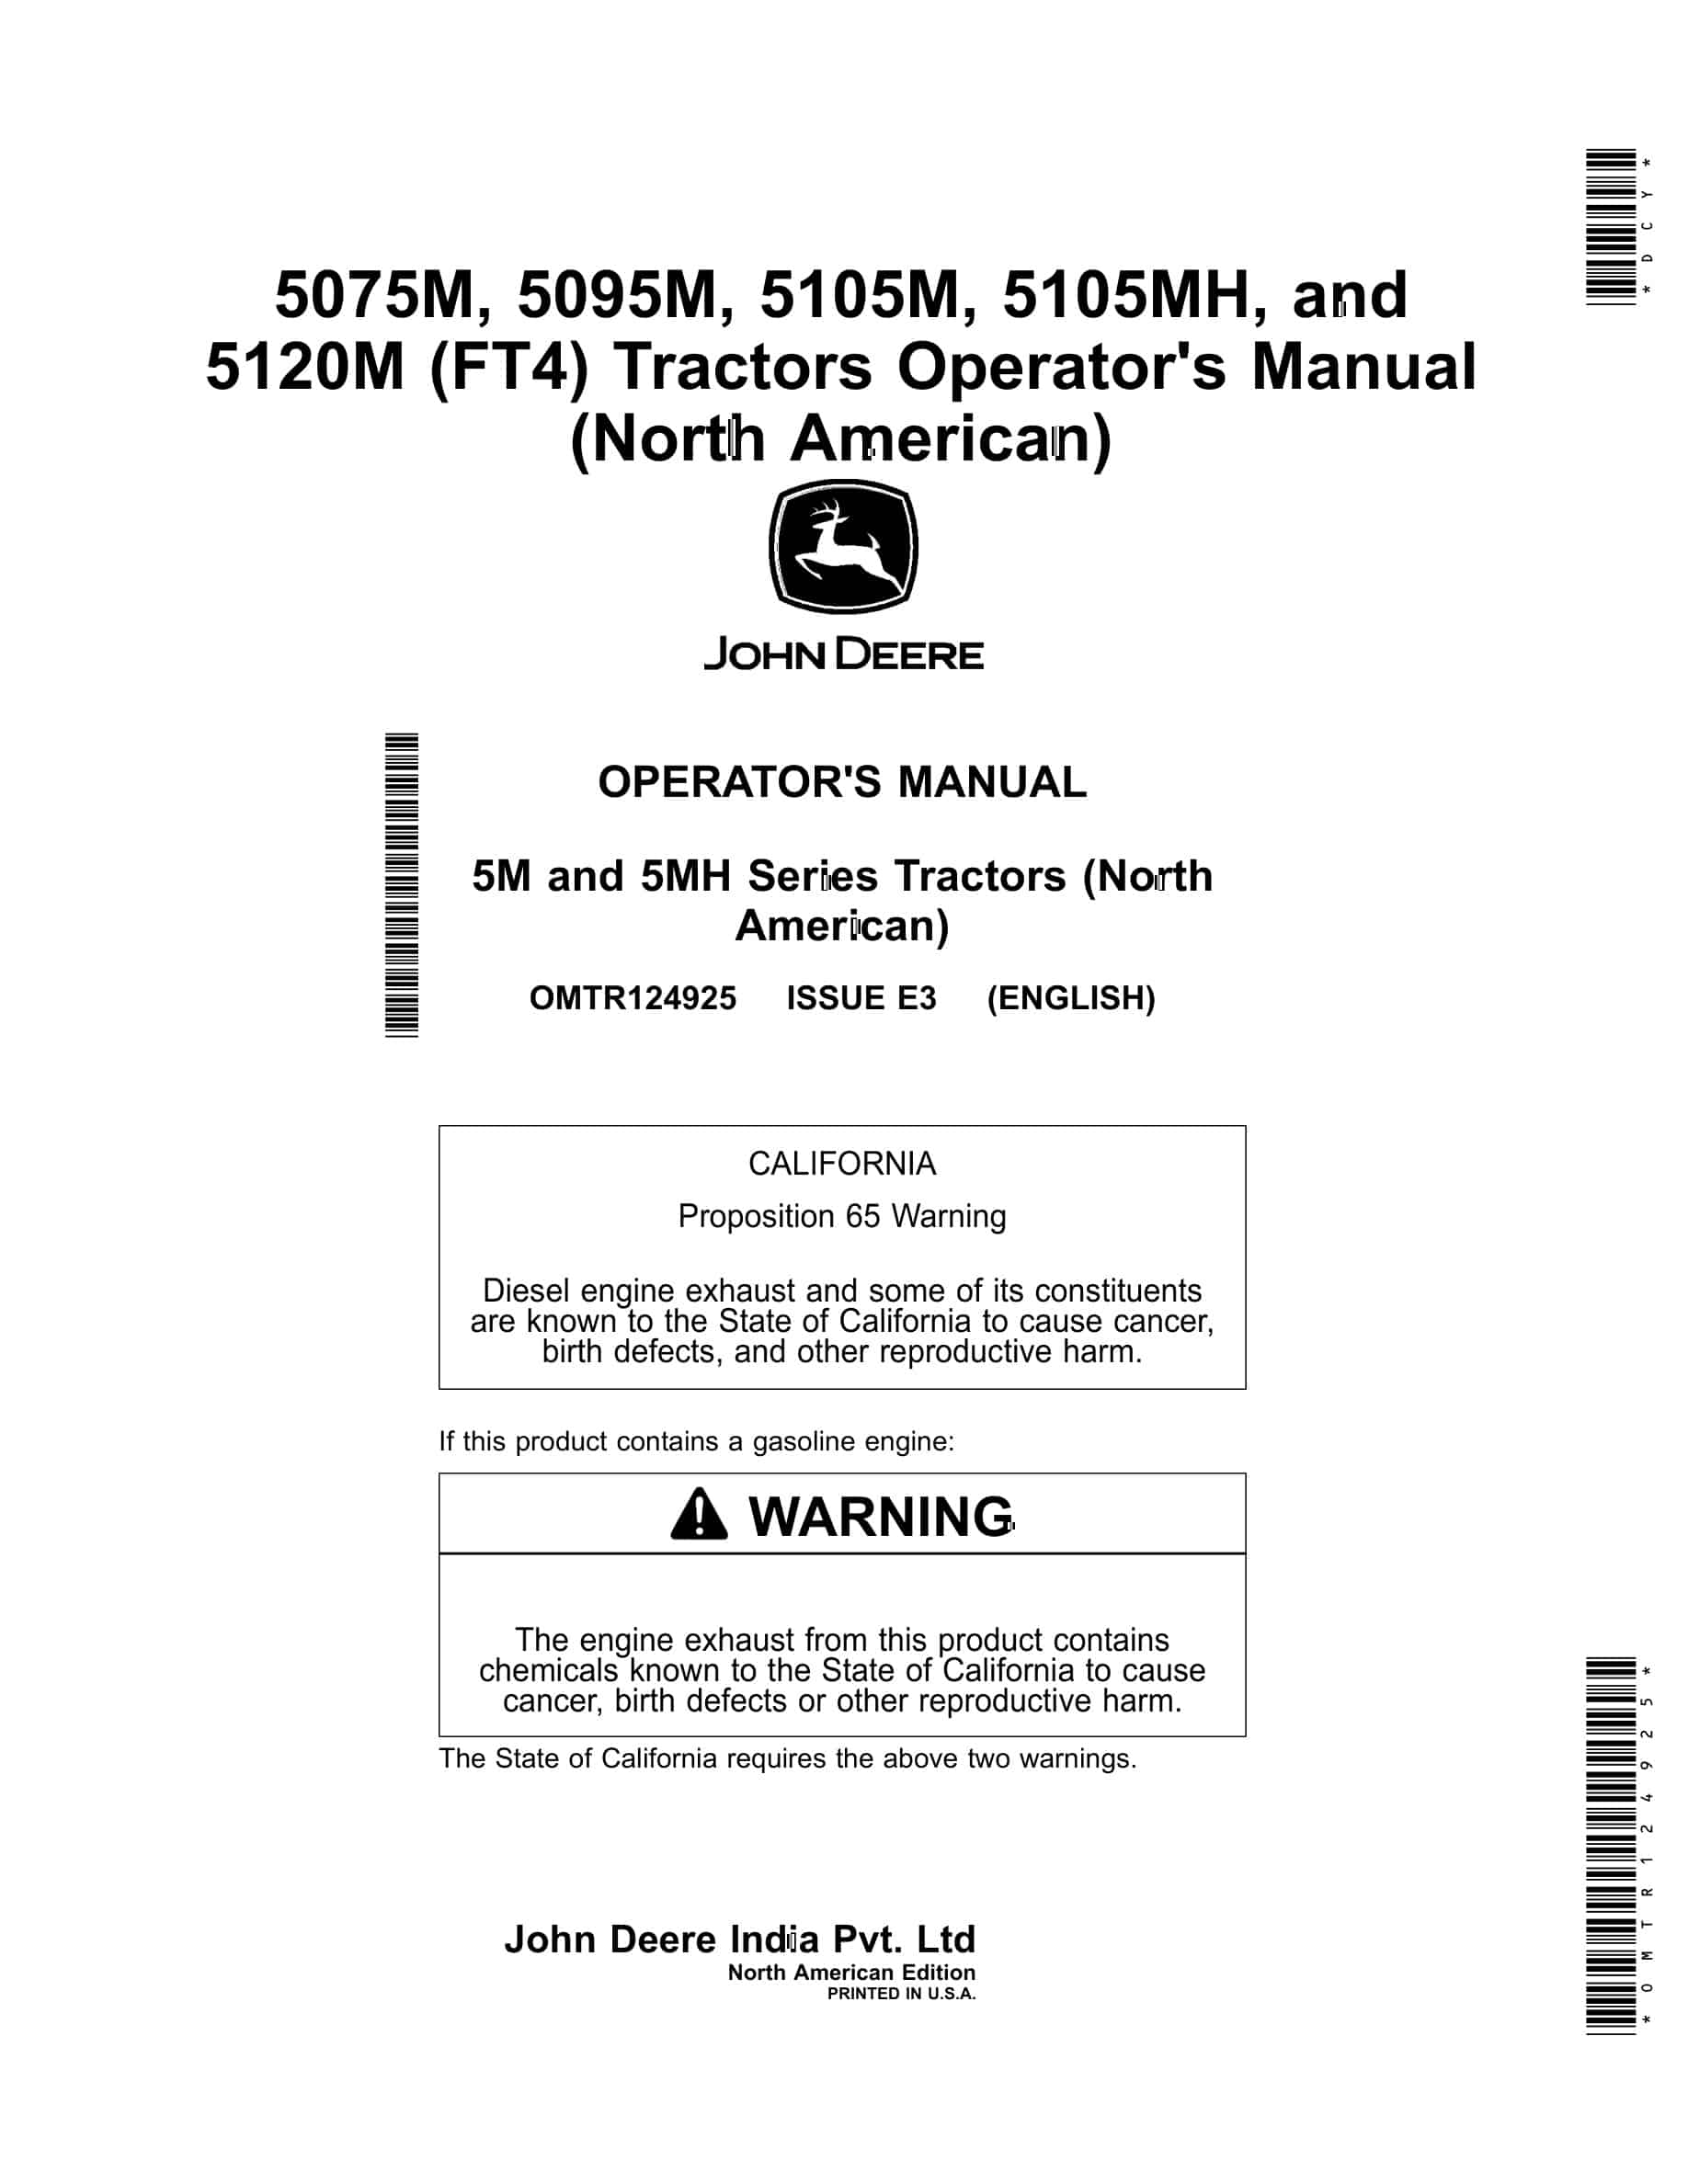 John Deere 5m And 5mh Series Tractors Operator Manuals OMTR124925-1